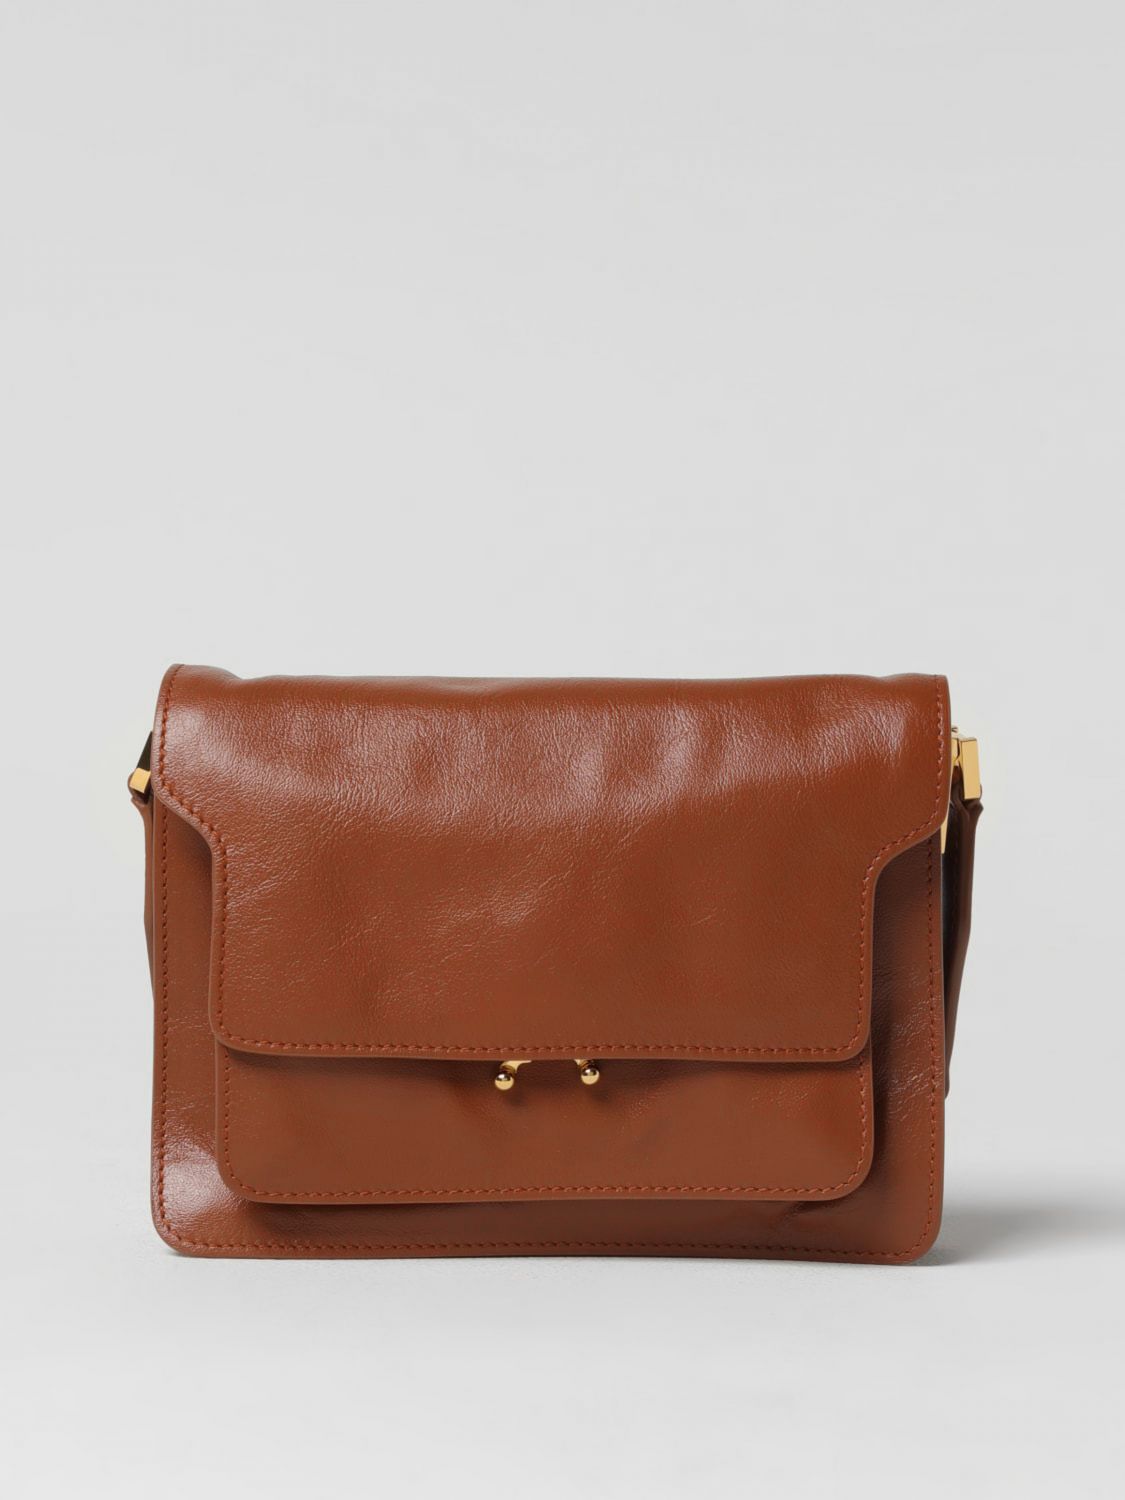 Marni - Trunk Soft Large Bag in Brown Leather - Shoulder Bags - Man